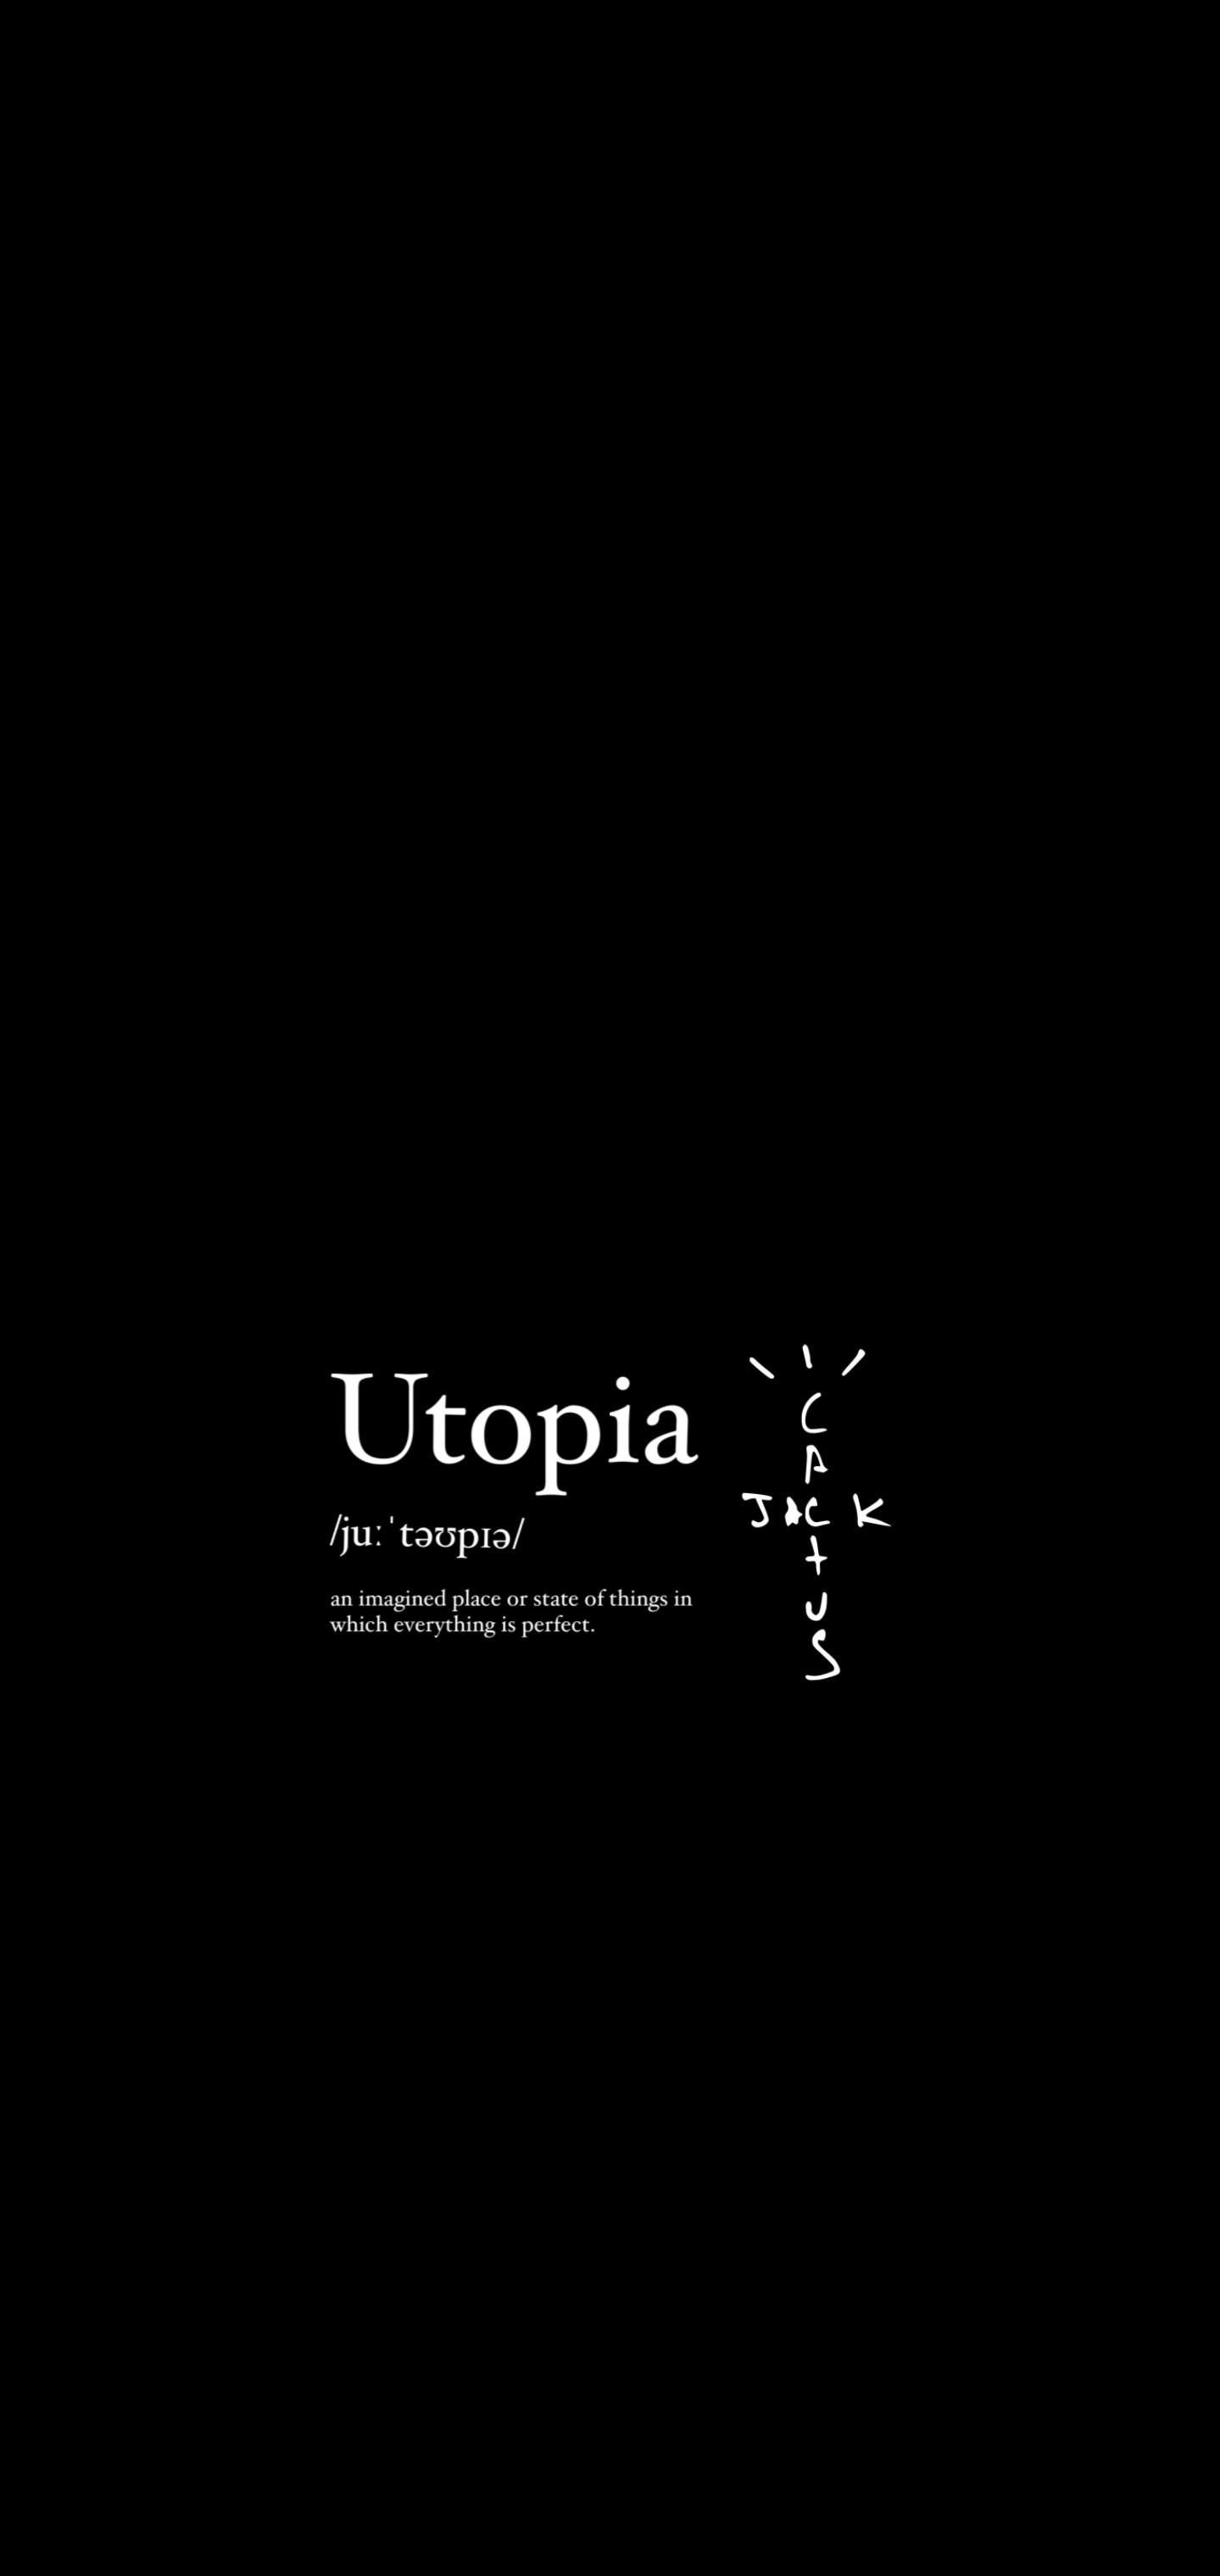 Simple utopia wallpaper. Idk, r